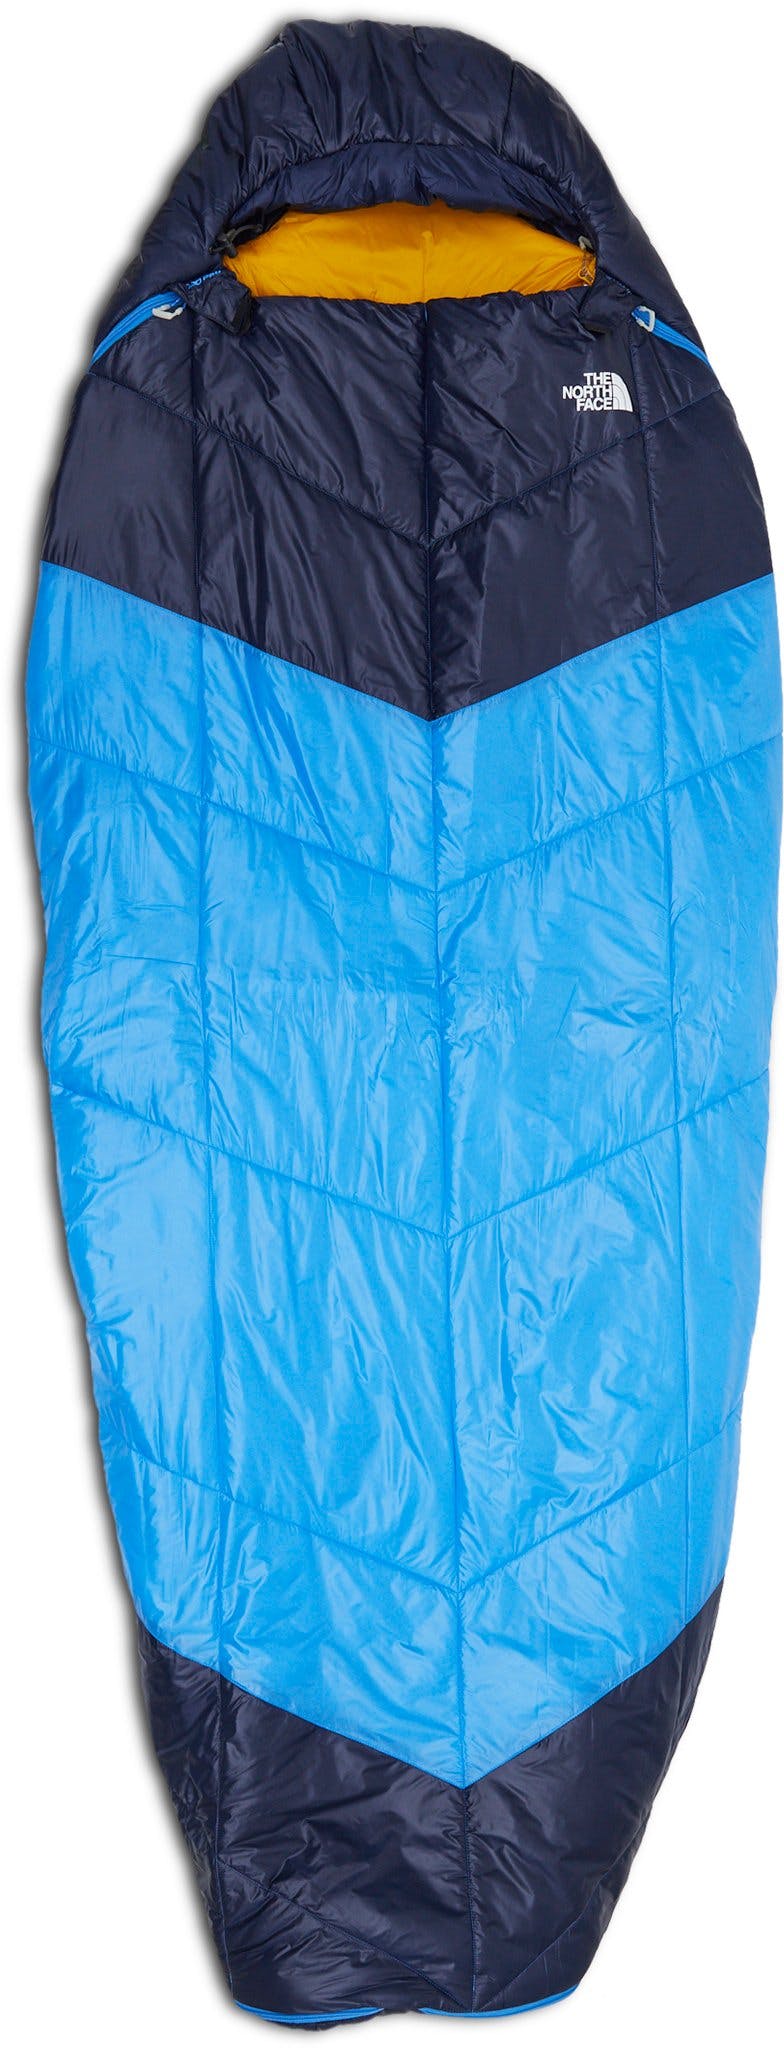 Product image for One Bag Sleeping Bag - 5°F / -15°C